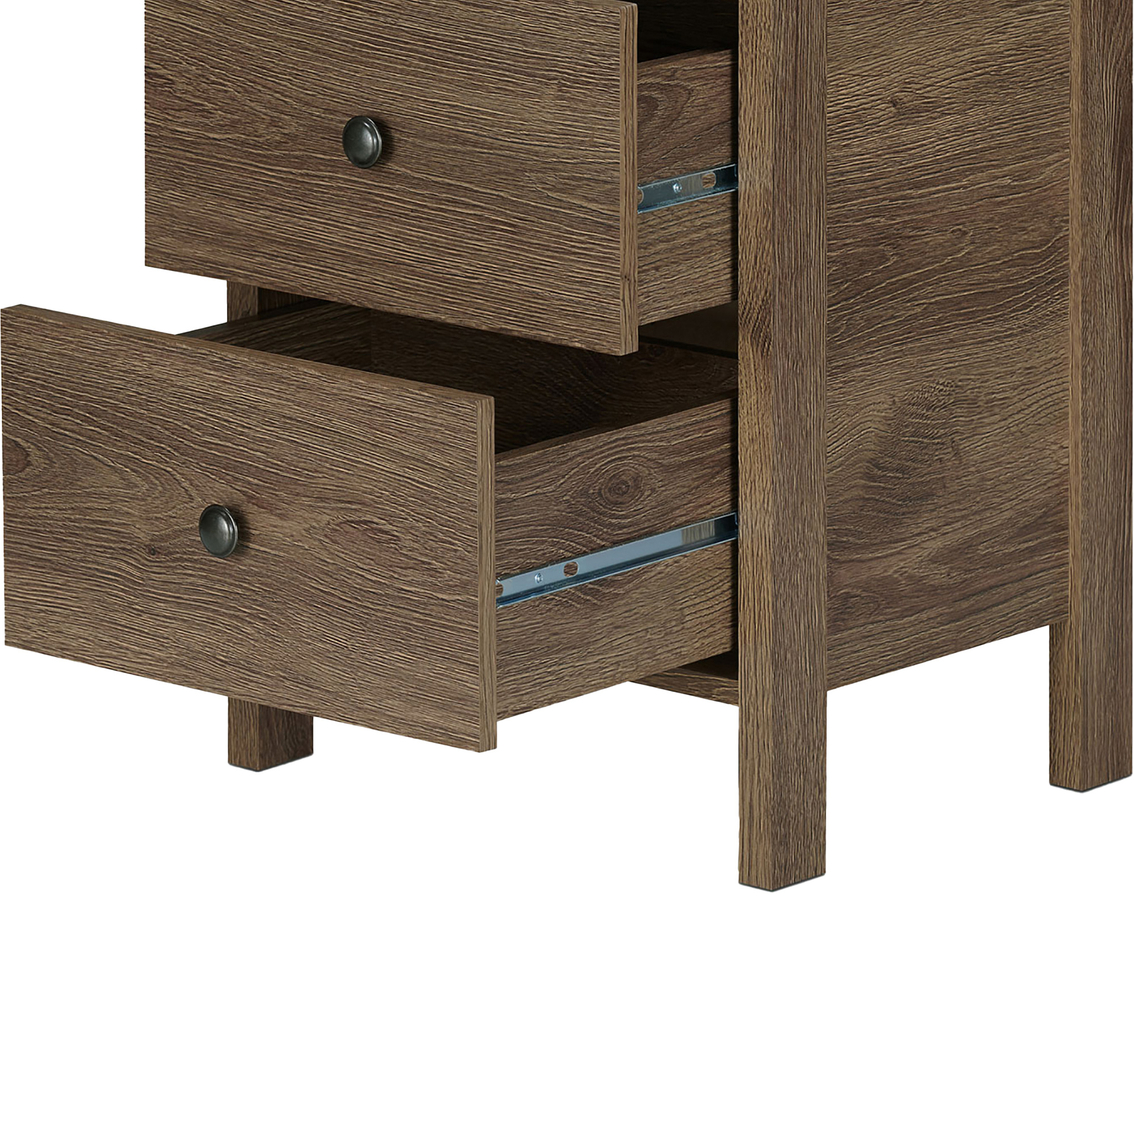 Furniture of America Daena Wood 2 Drawer Nightstand - Image 2 of 2